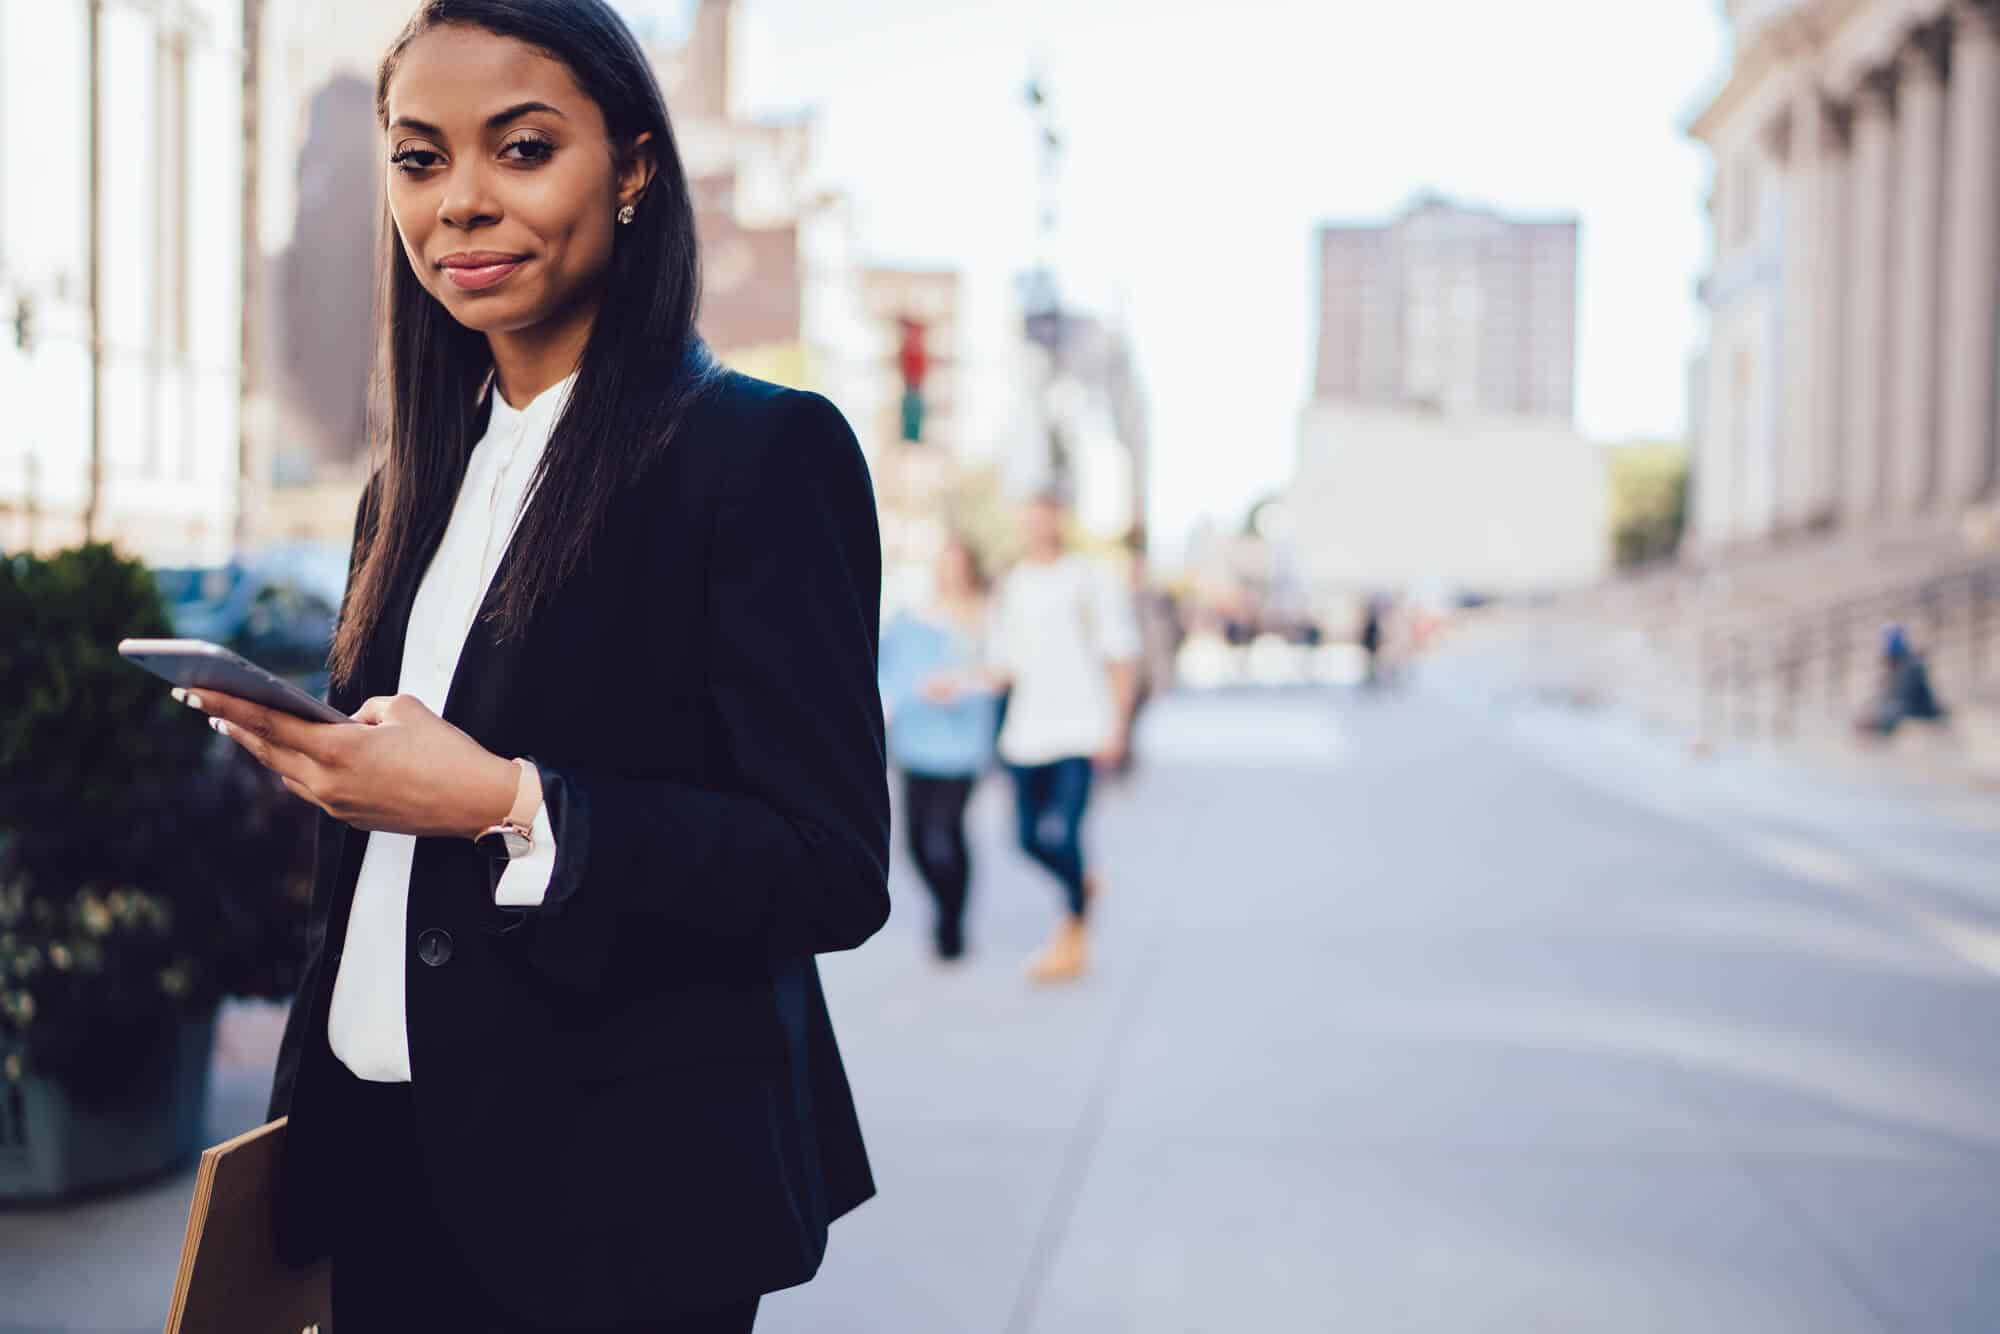 Female working in major bank career path